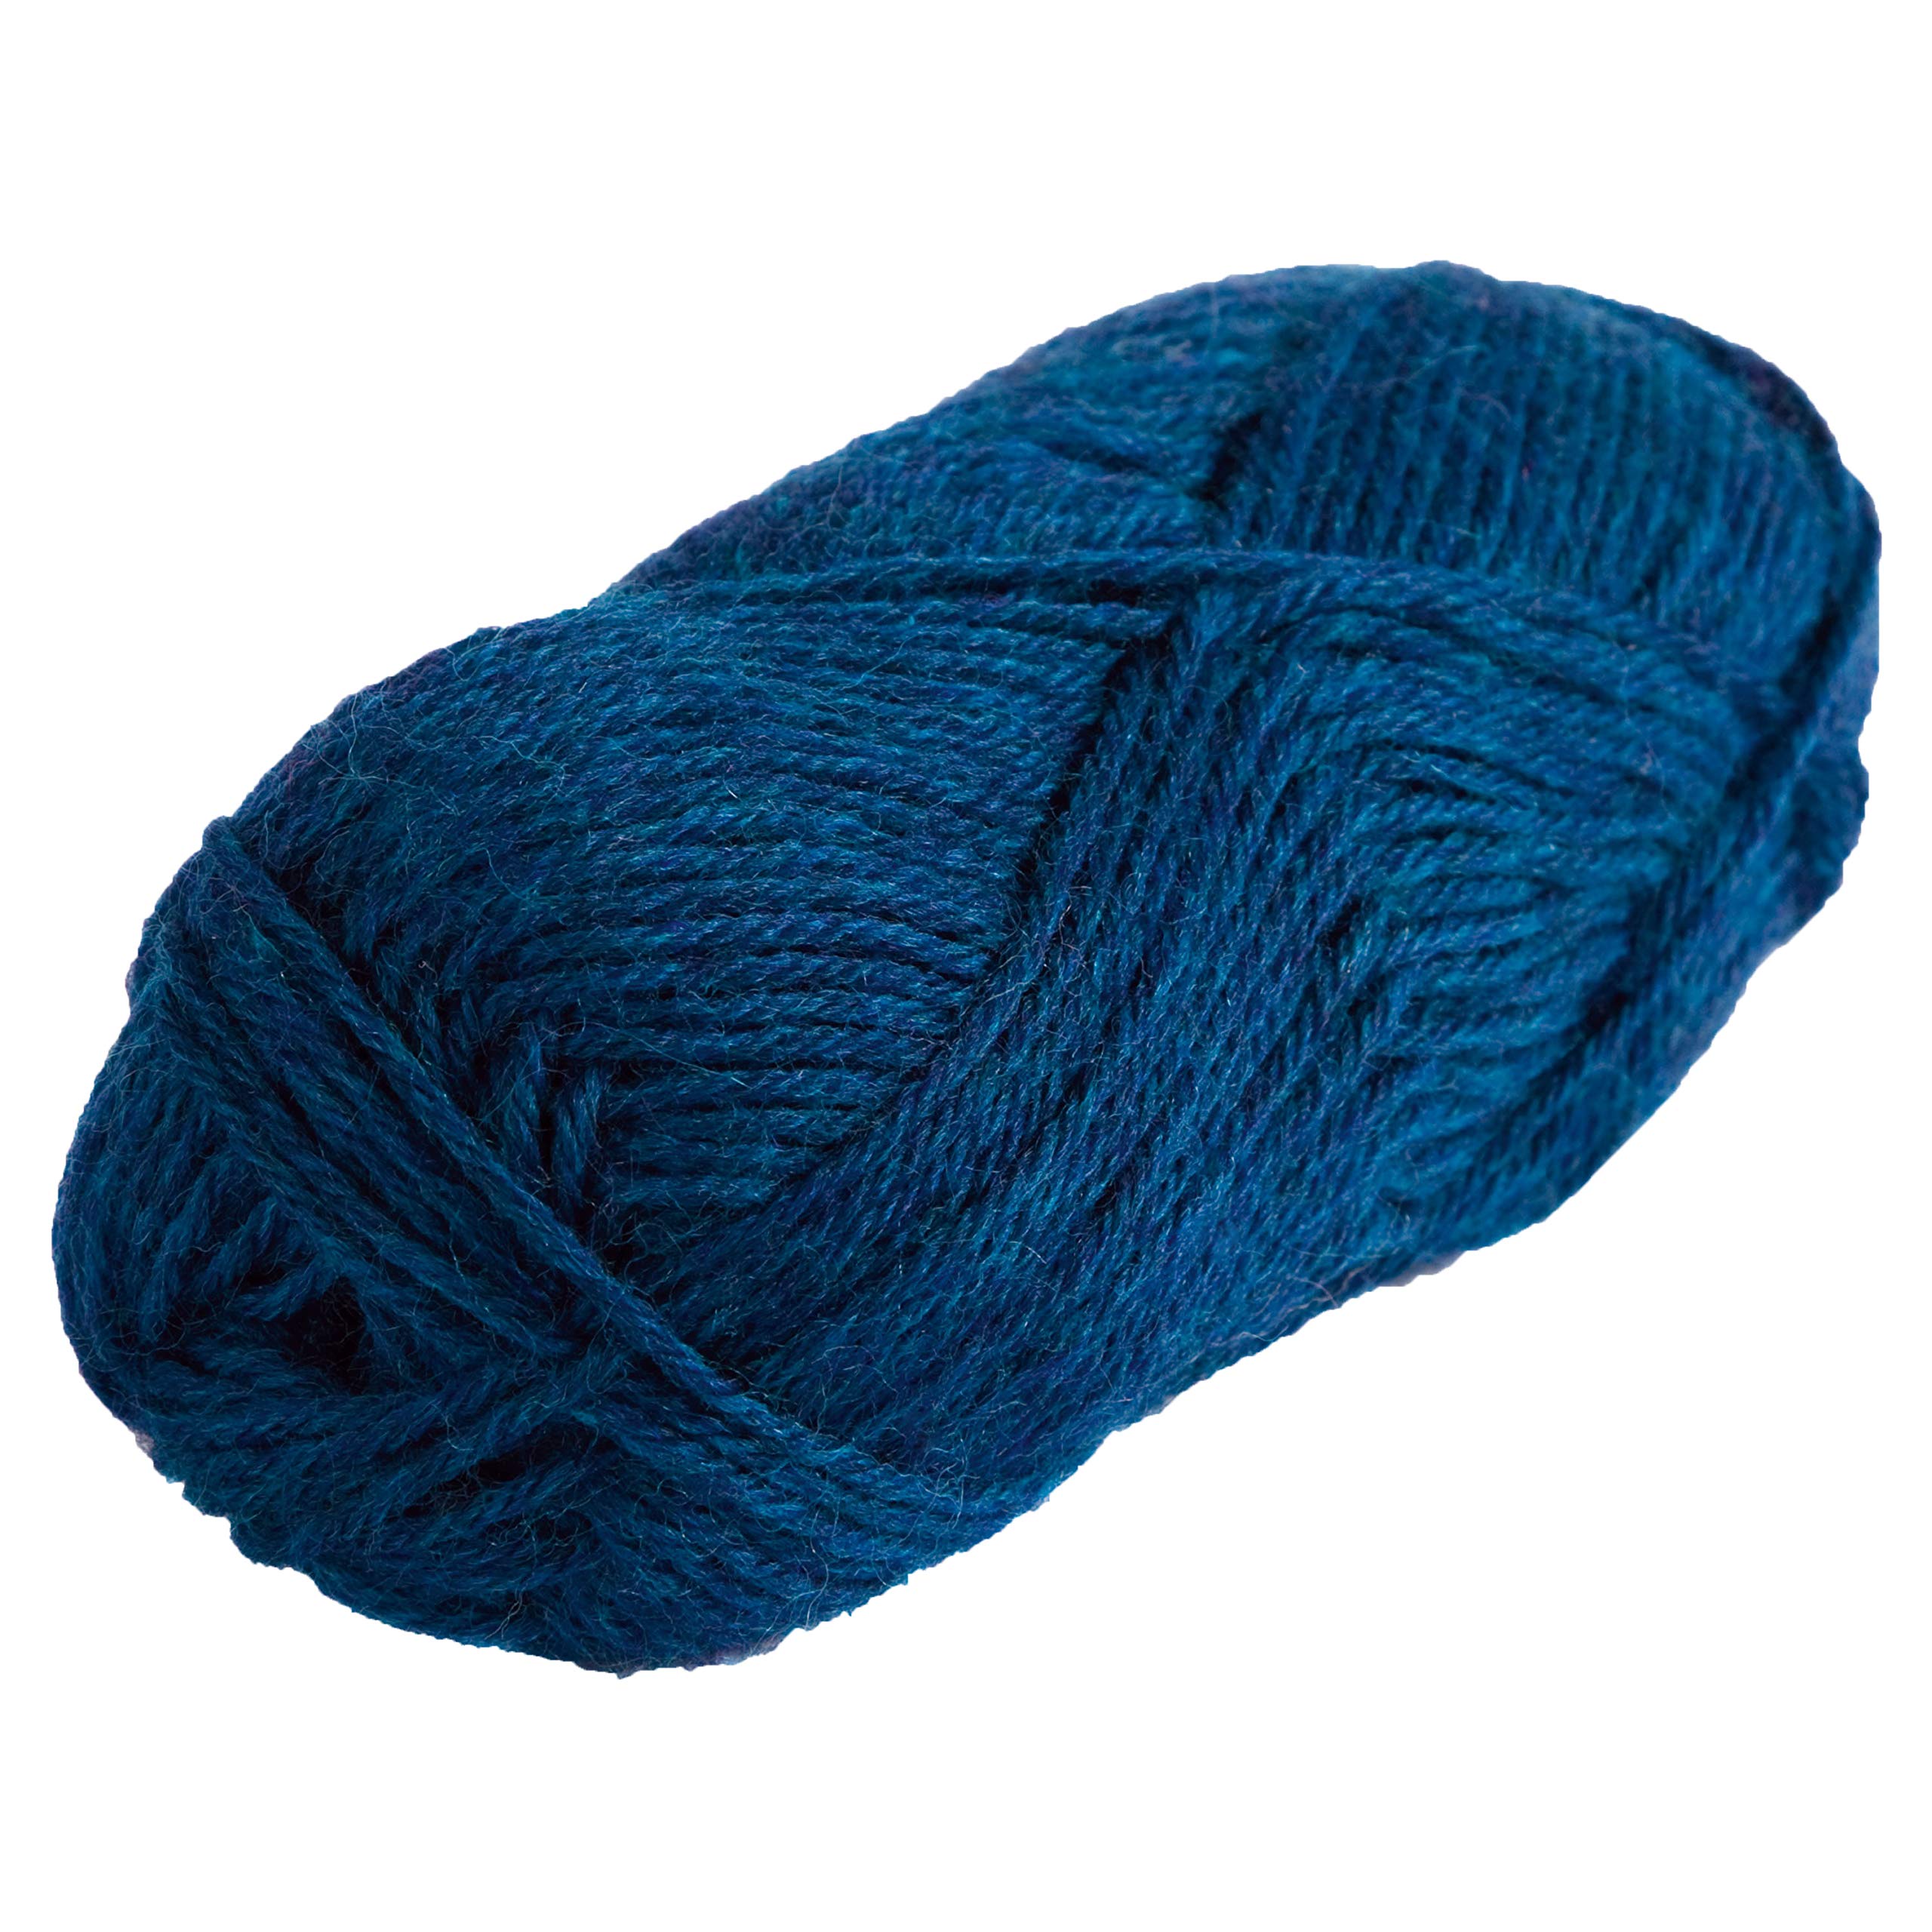 Knit Picks Hand Operated Yarn Ball Winder (Purple)